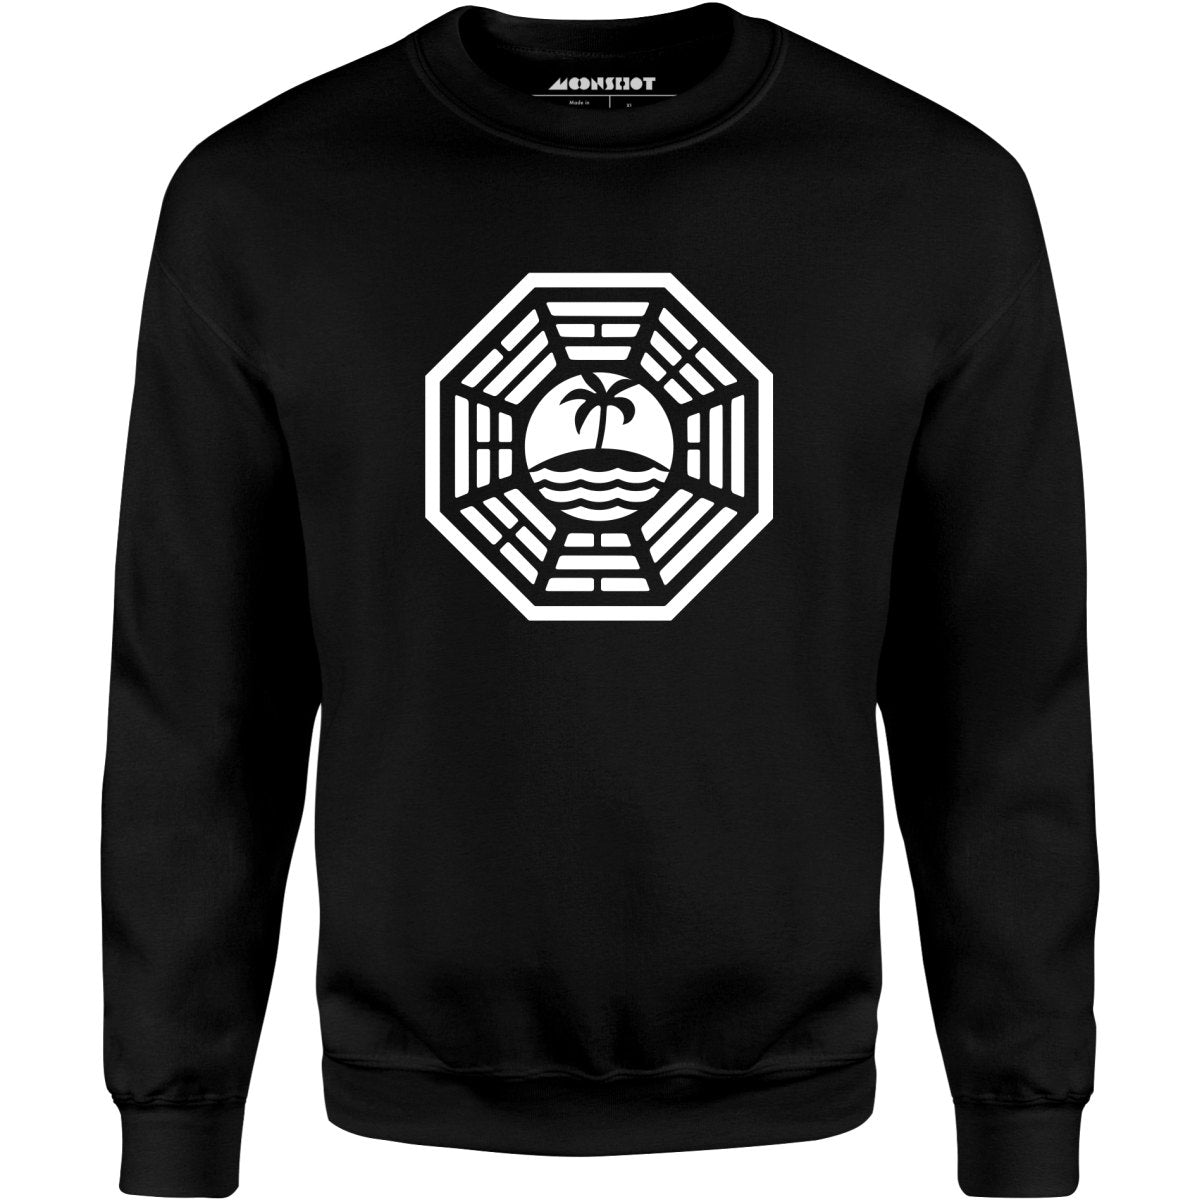 The Dharma Initiative - Unisex Sweatshirt